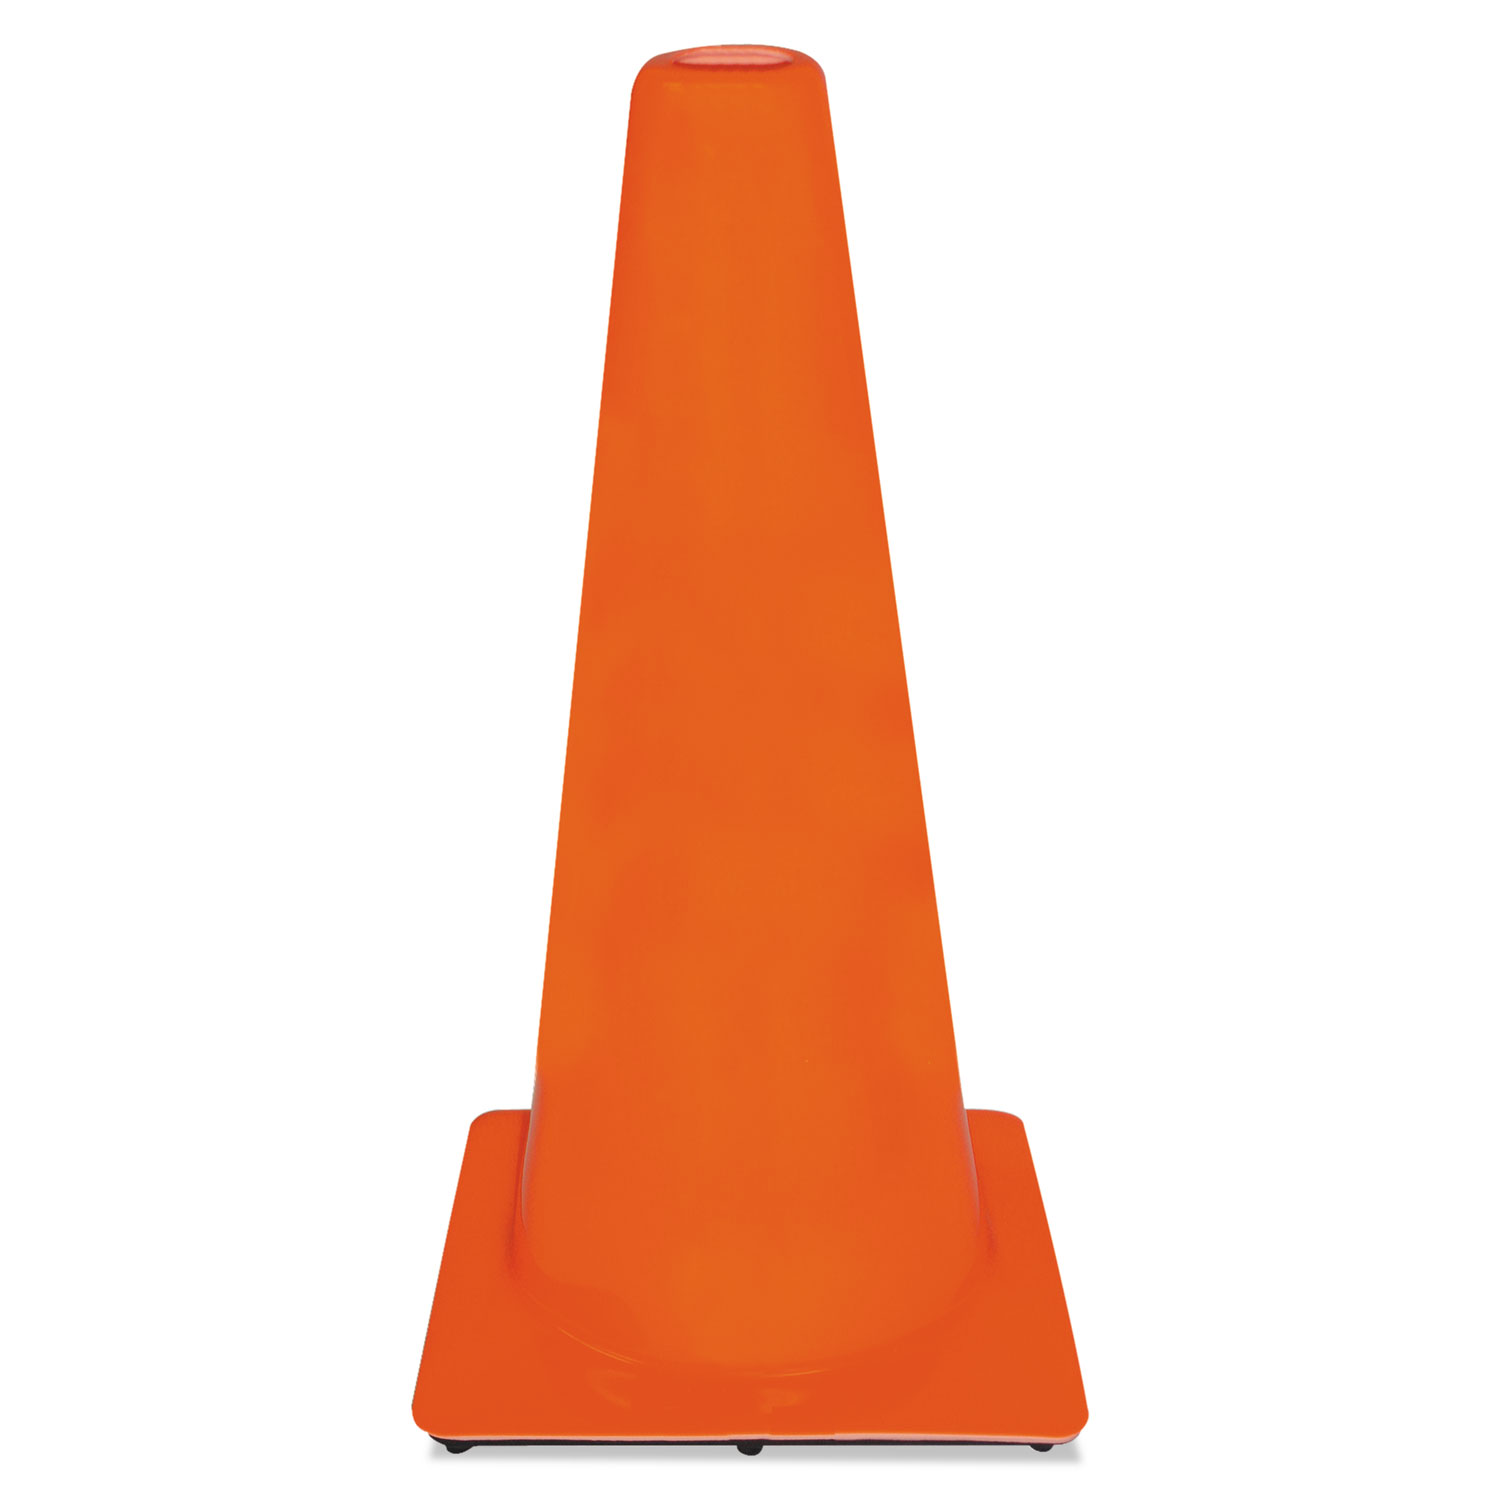  3M 90129-00006 Non-Reflective Safety Cone, 13 x 13 x 28, Orange (MMM9012900006) 